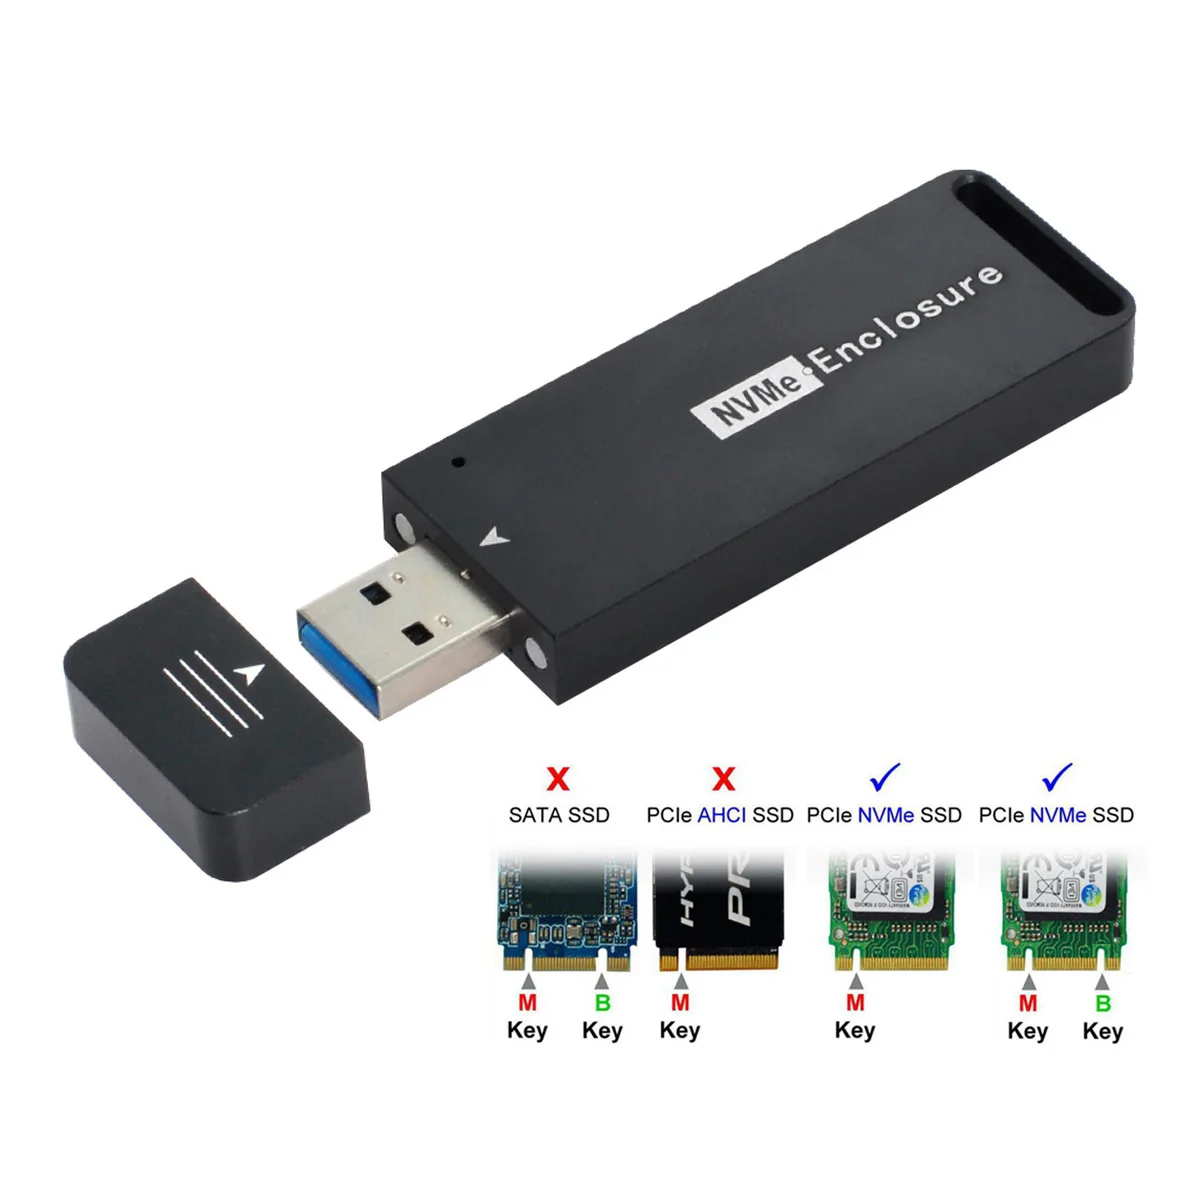 USB 3.1 Gen2 10Gbps, kad NVME PCI-E-M-Key Kietojo Disko Išorinis Talpyklos 2230/2242mm